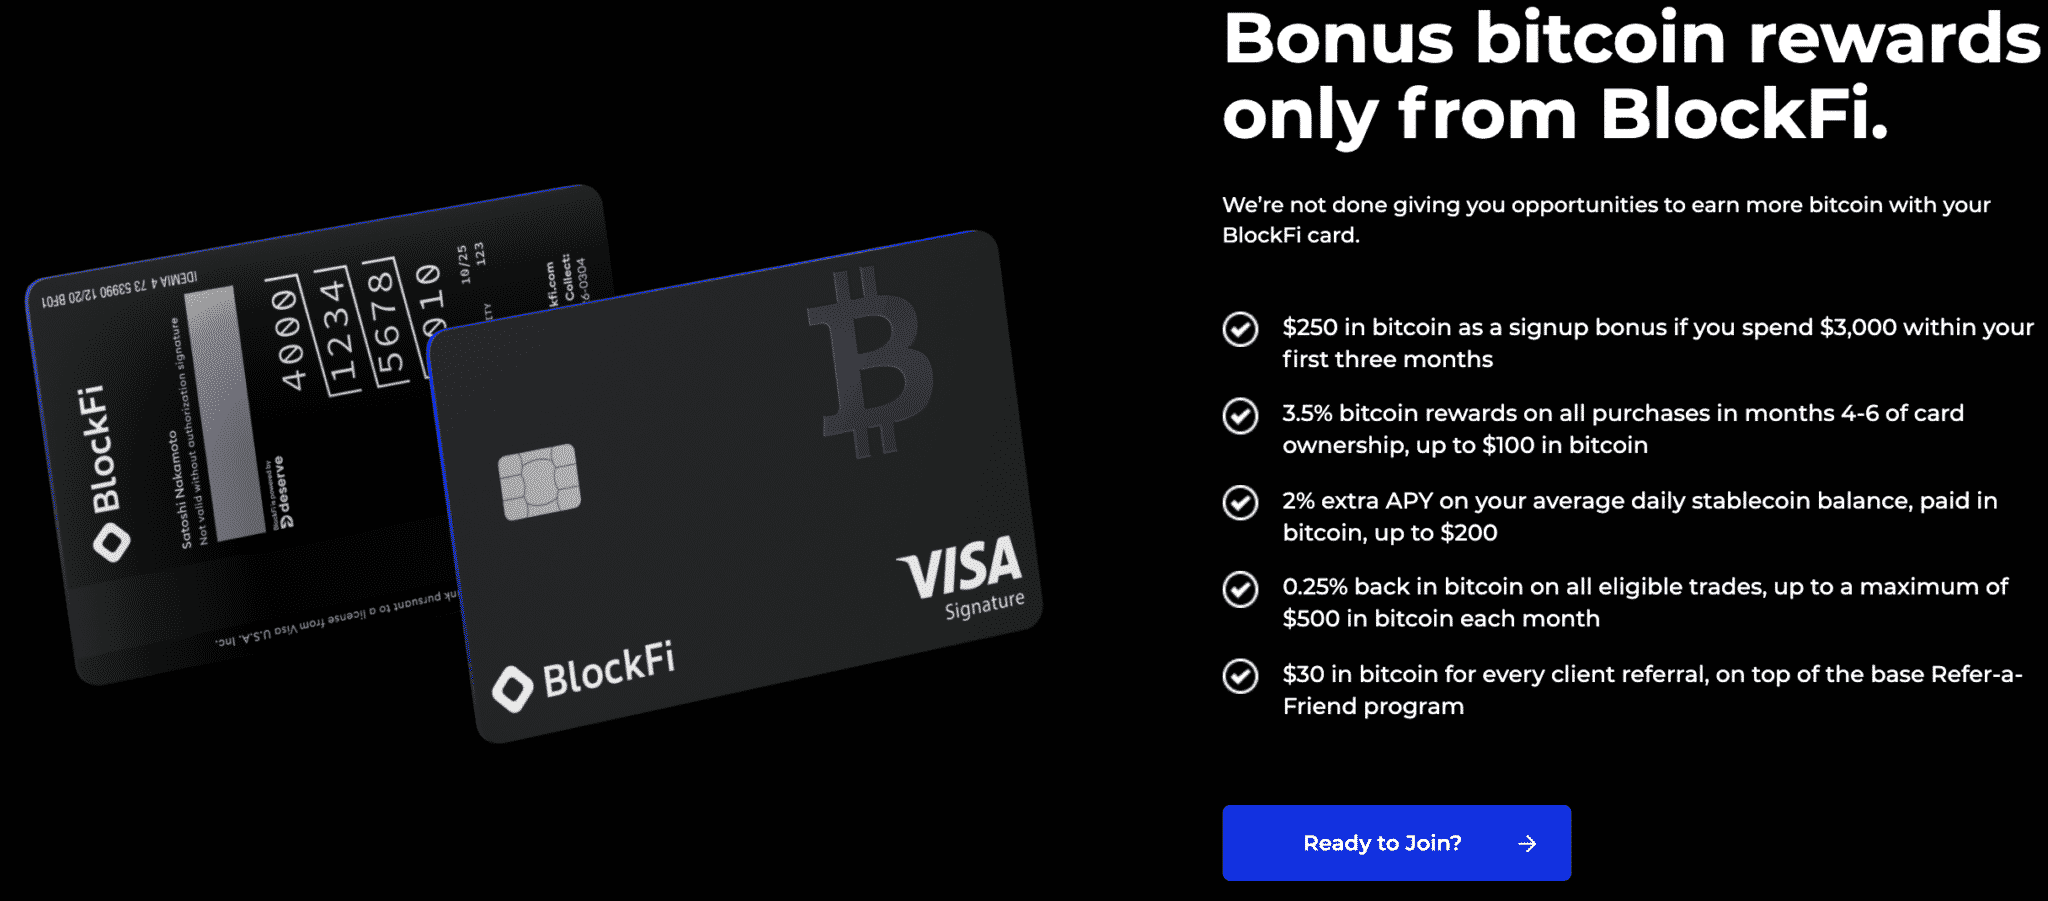 Bonuses from BlockFi's credit card landing page